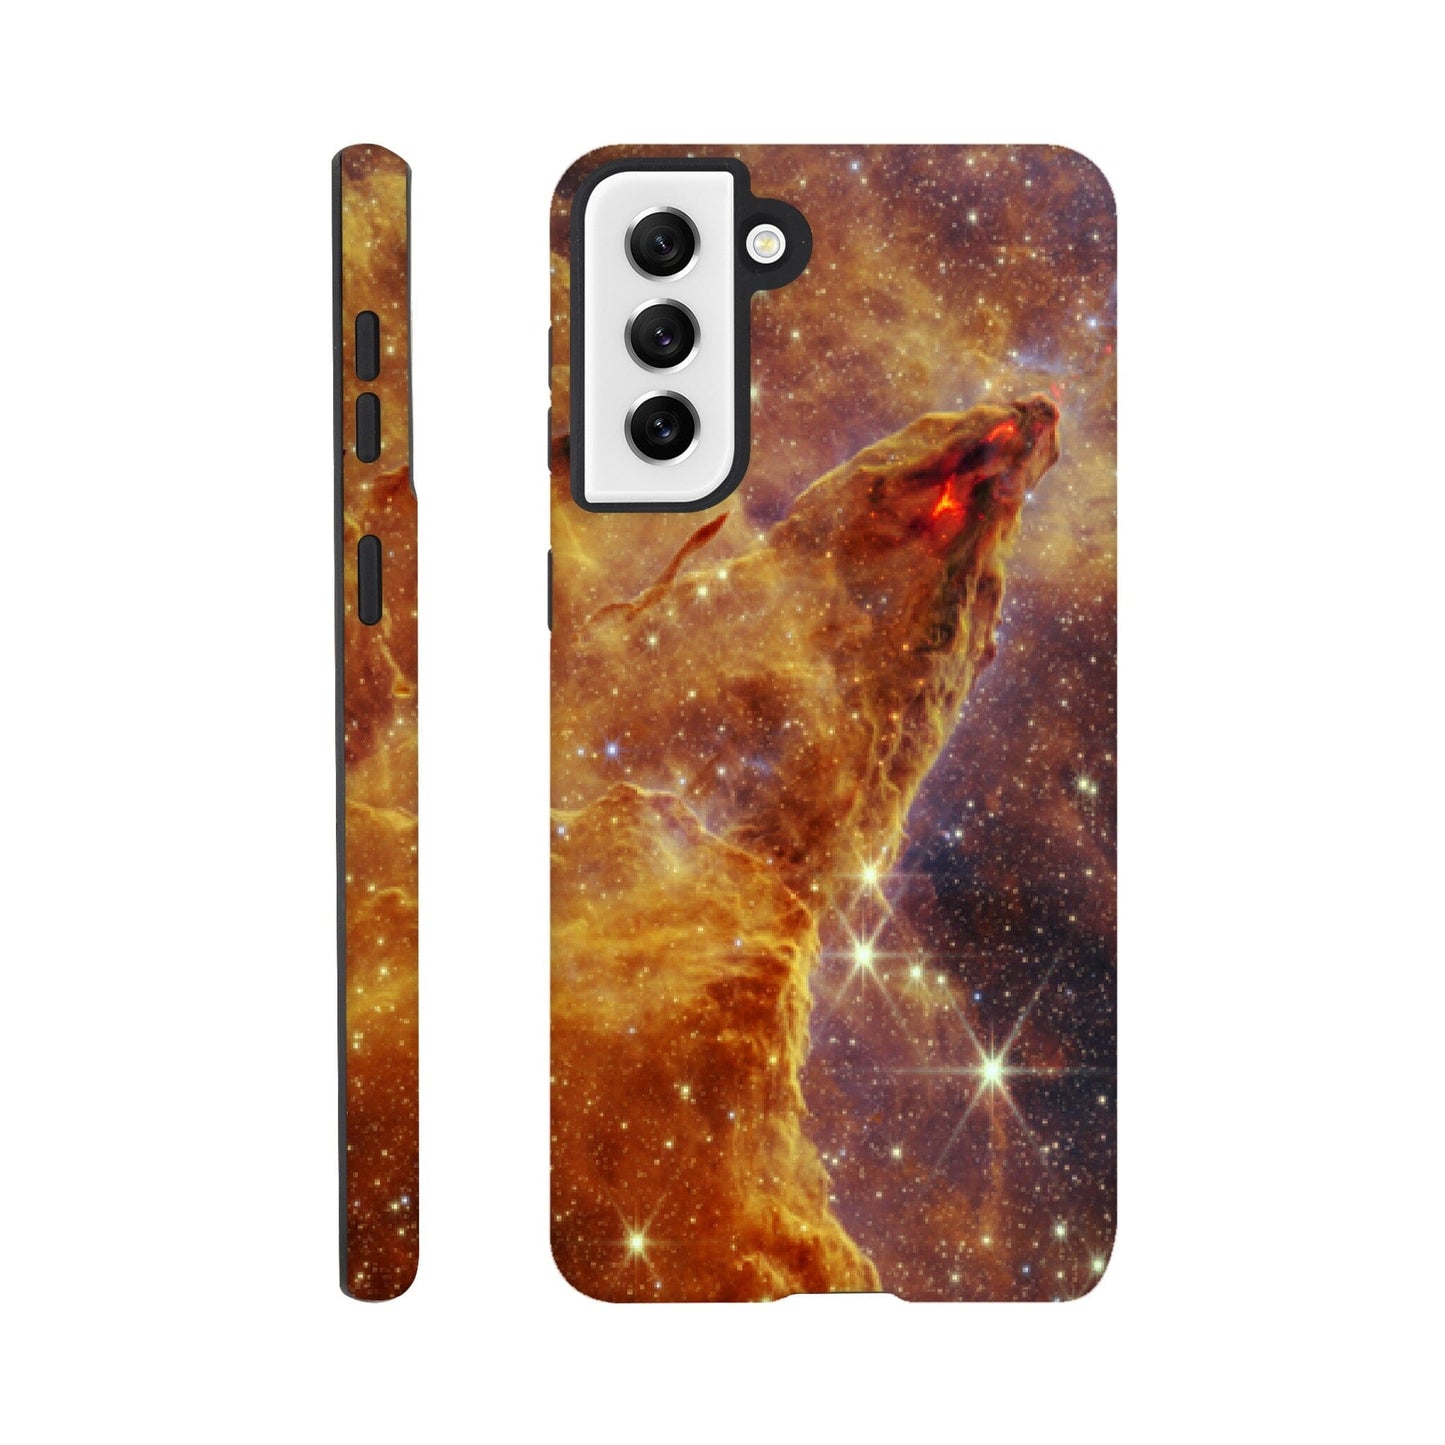 NASA - Phone Case Tough - 9. Pillars of Creation (NIRCam Image) - James Webb Space Telescope Phone Case TP Aviation Art Galaxy S21 Plus 